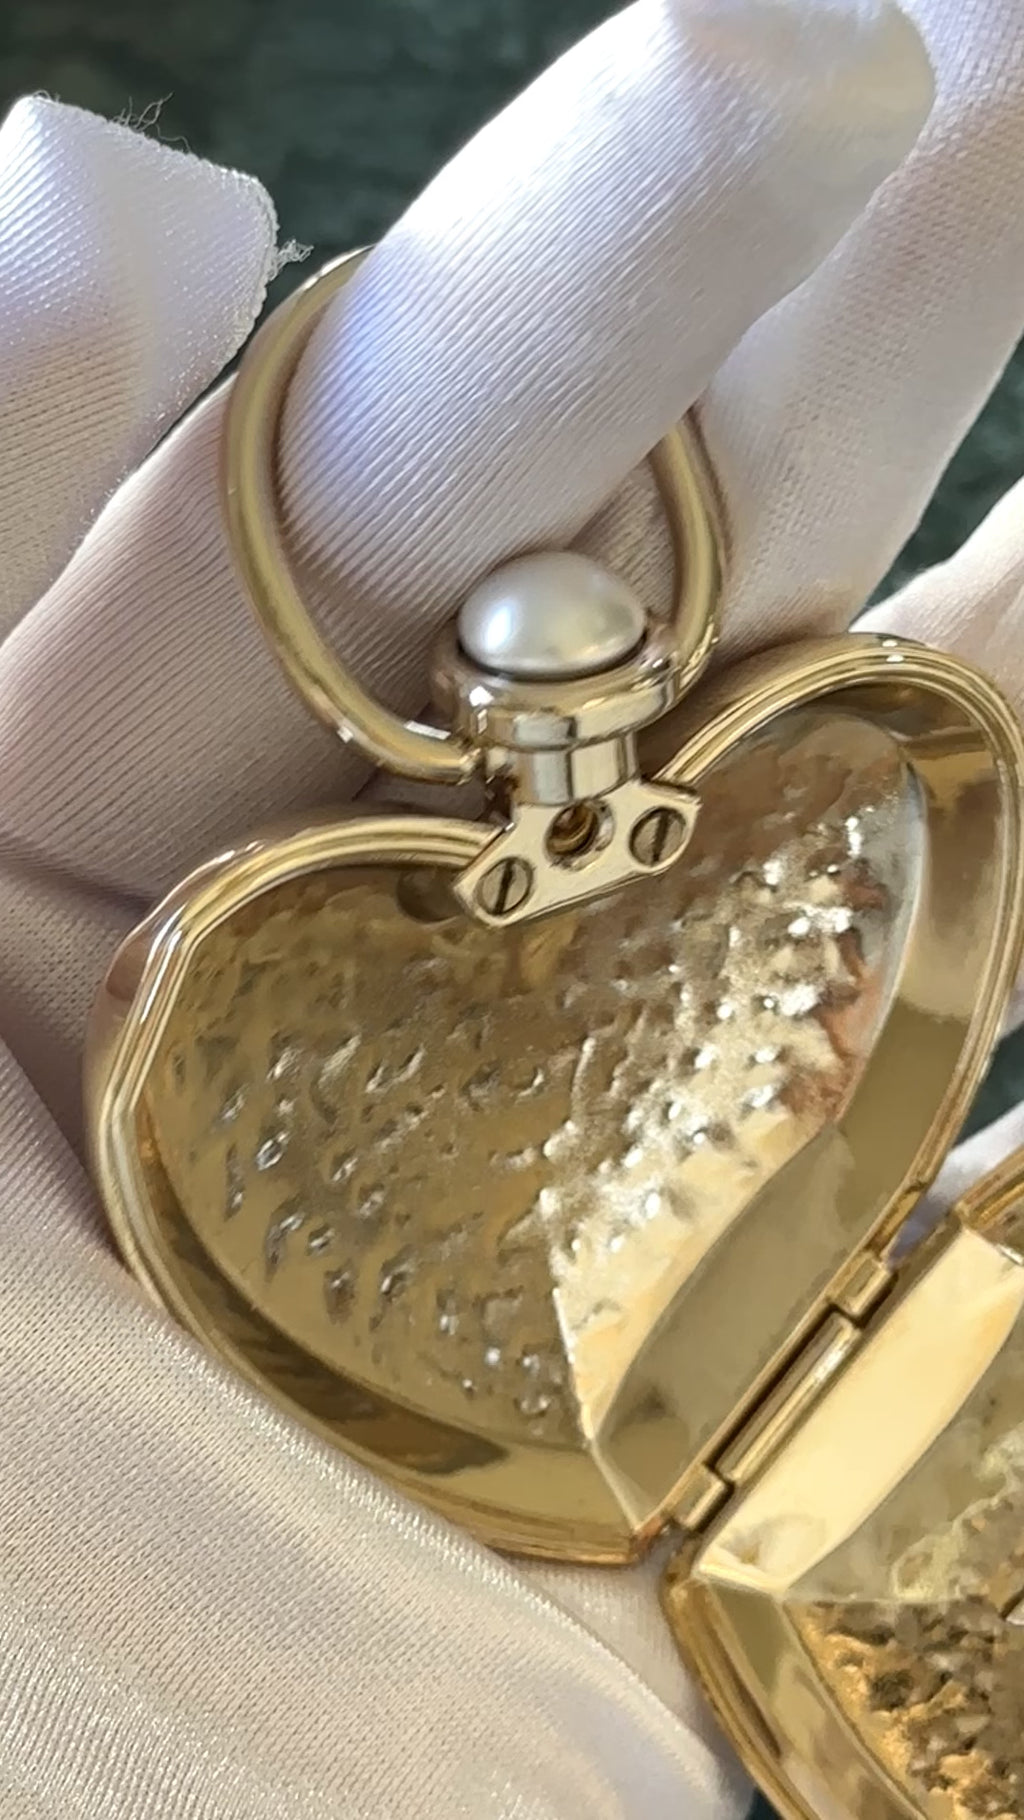 Chanel 22C Giant Heart Locket Pendant Necklace